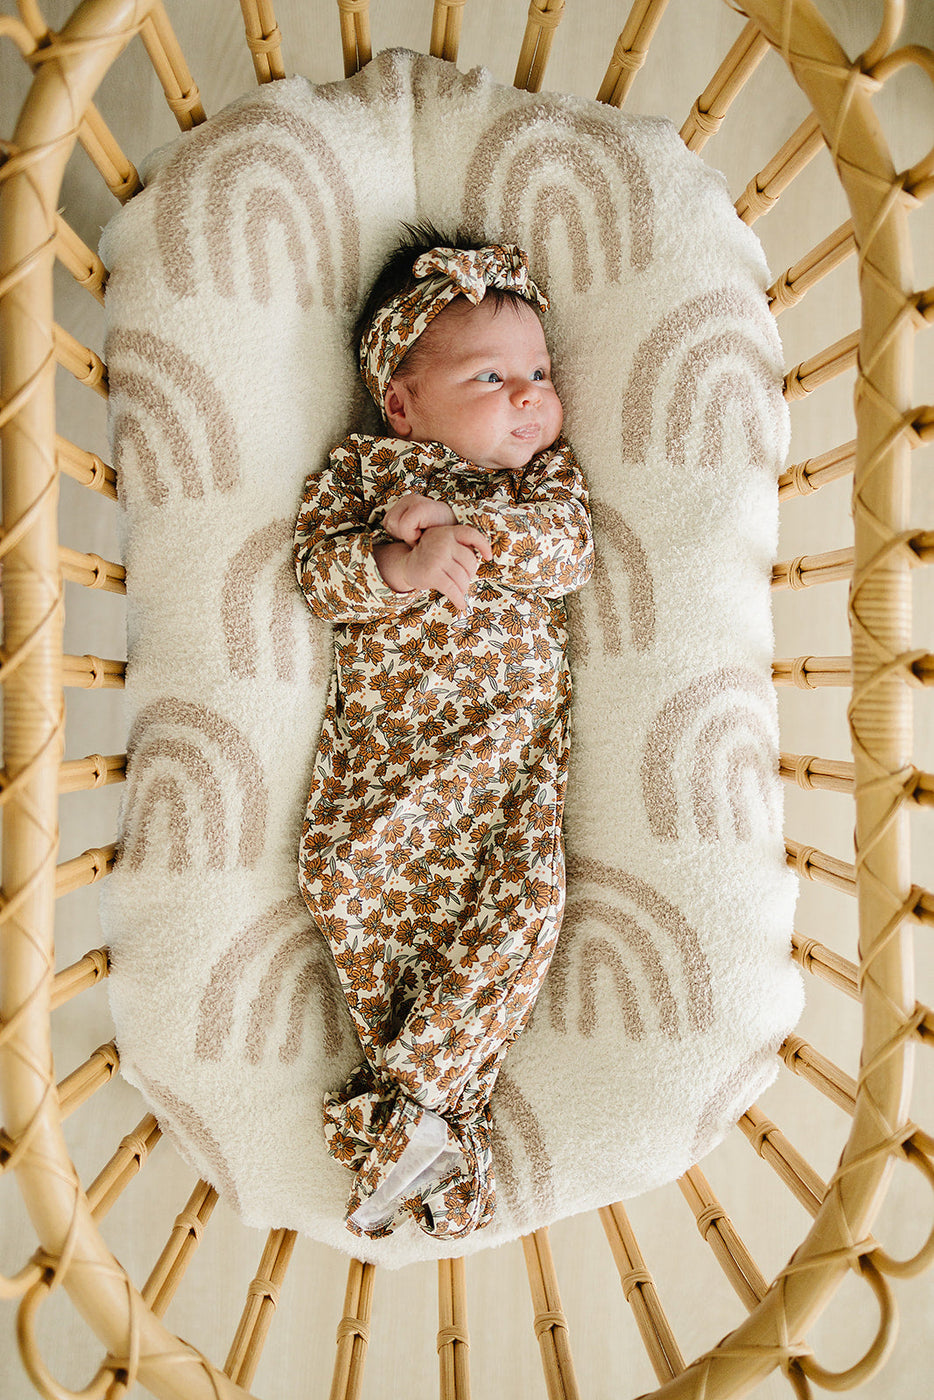 a baby lying in a crib